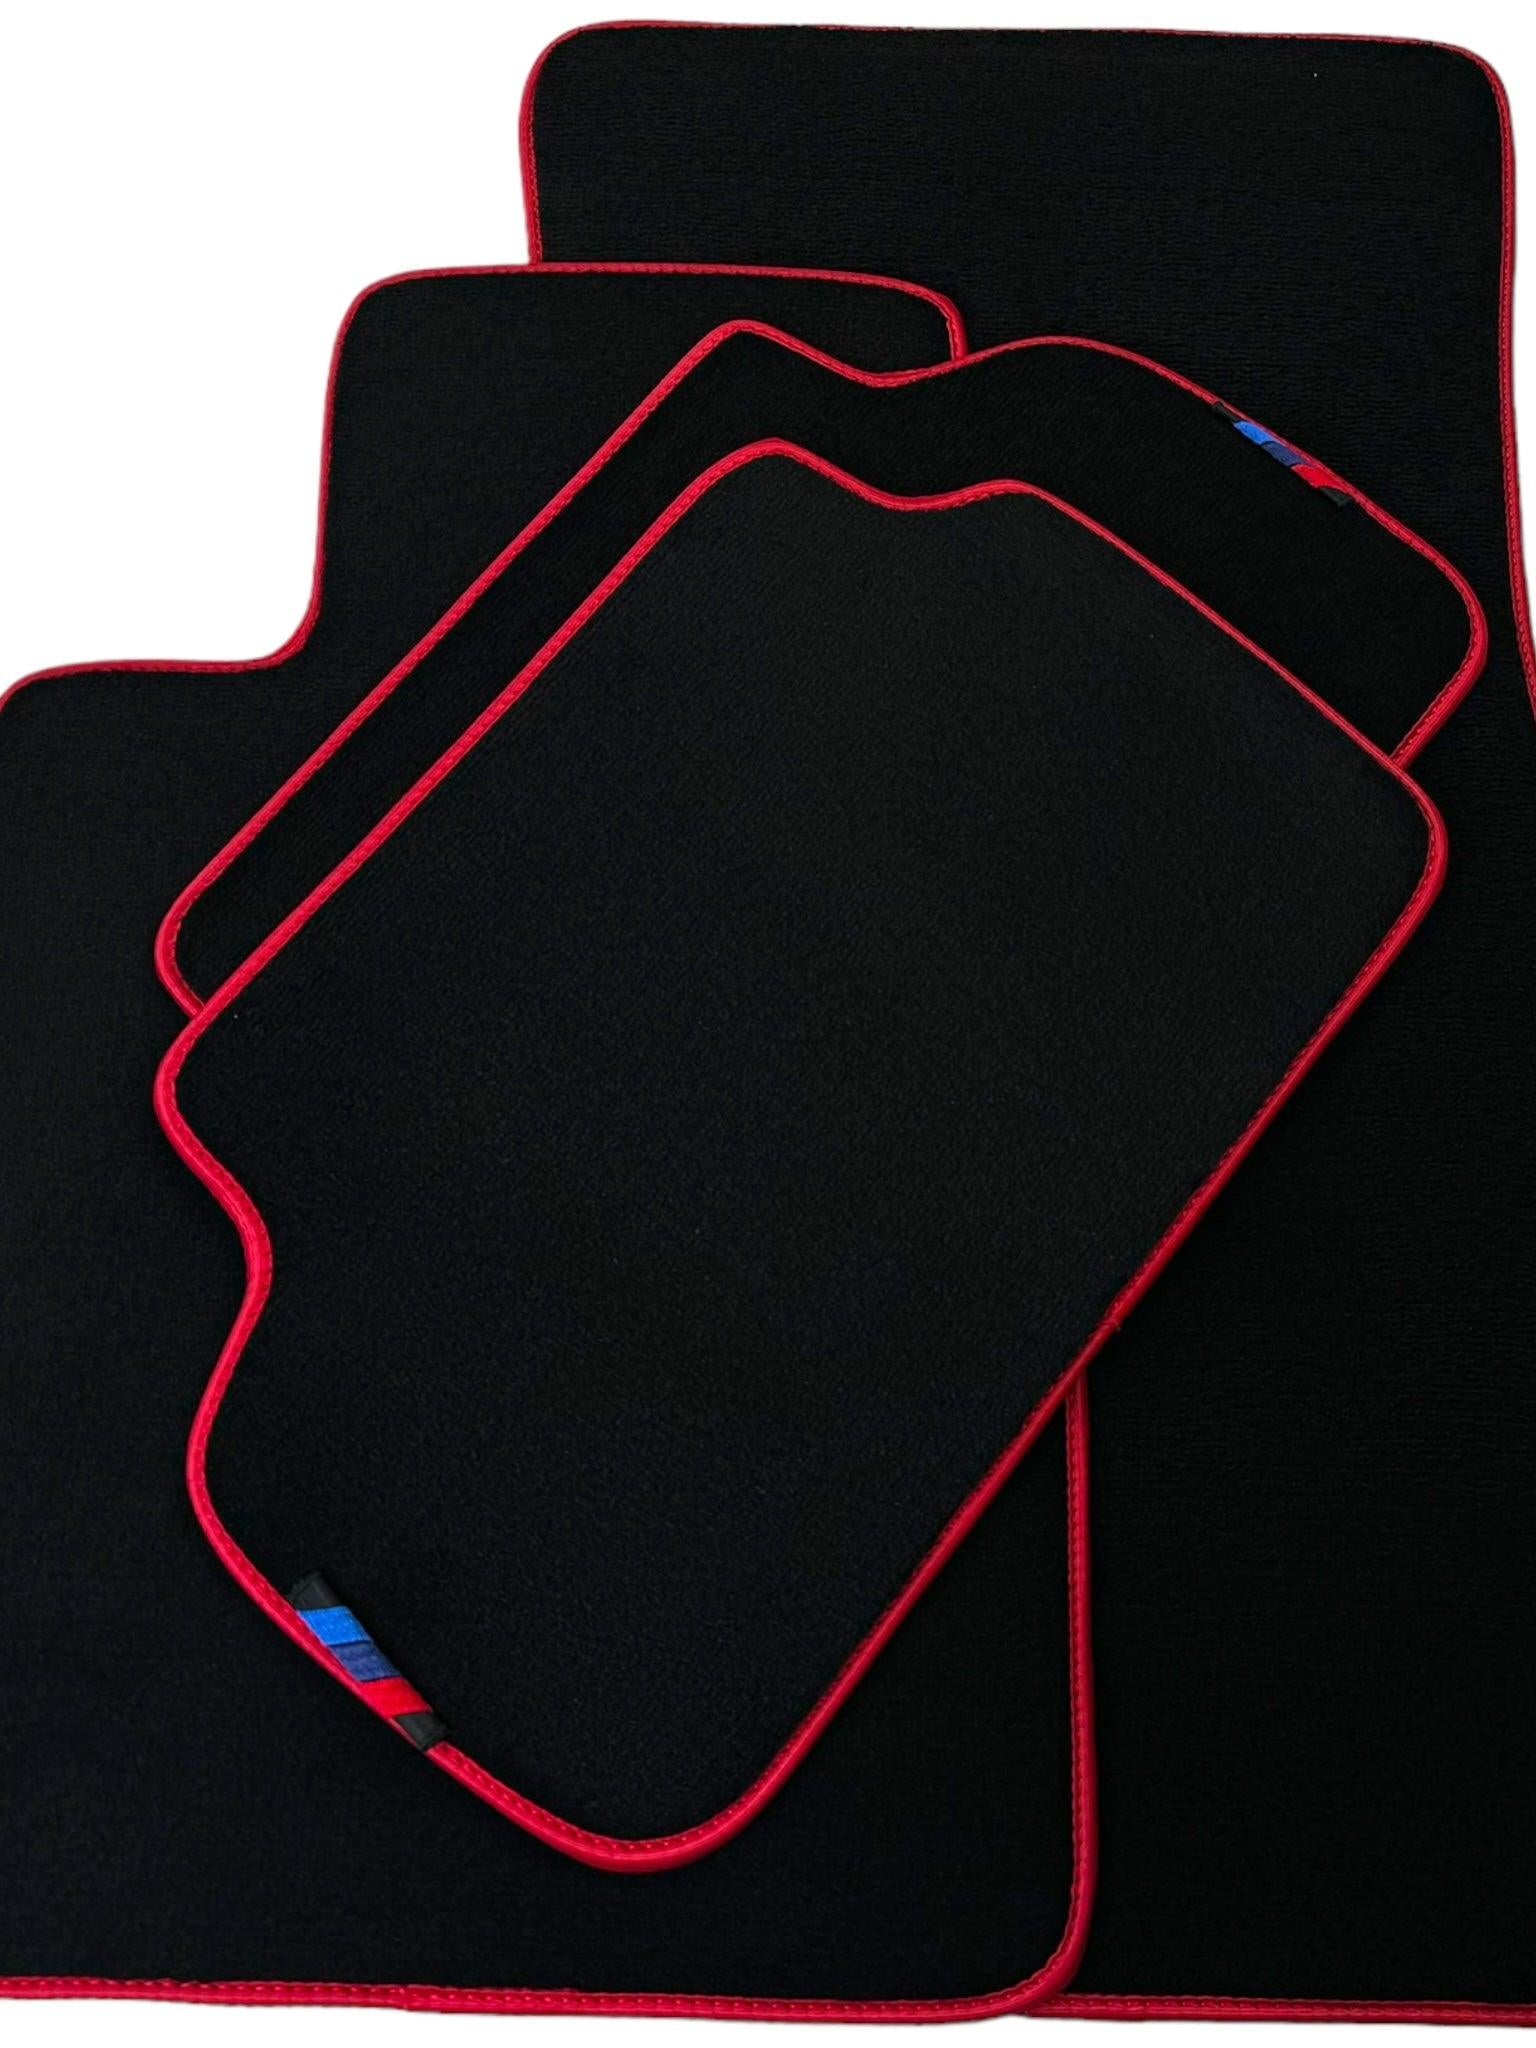 Black Floor Floor Mats For BMW X5 Series E70 | Red Trim